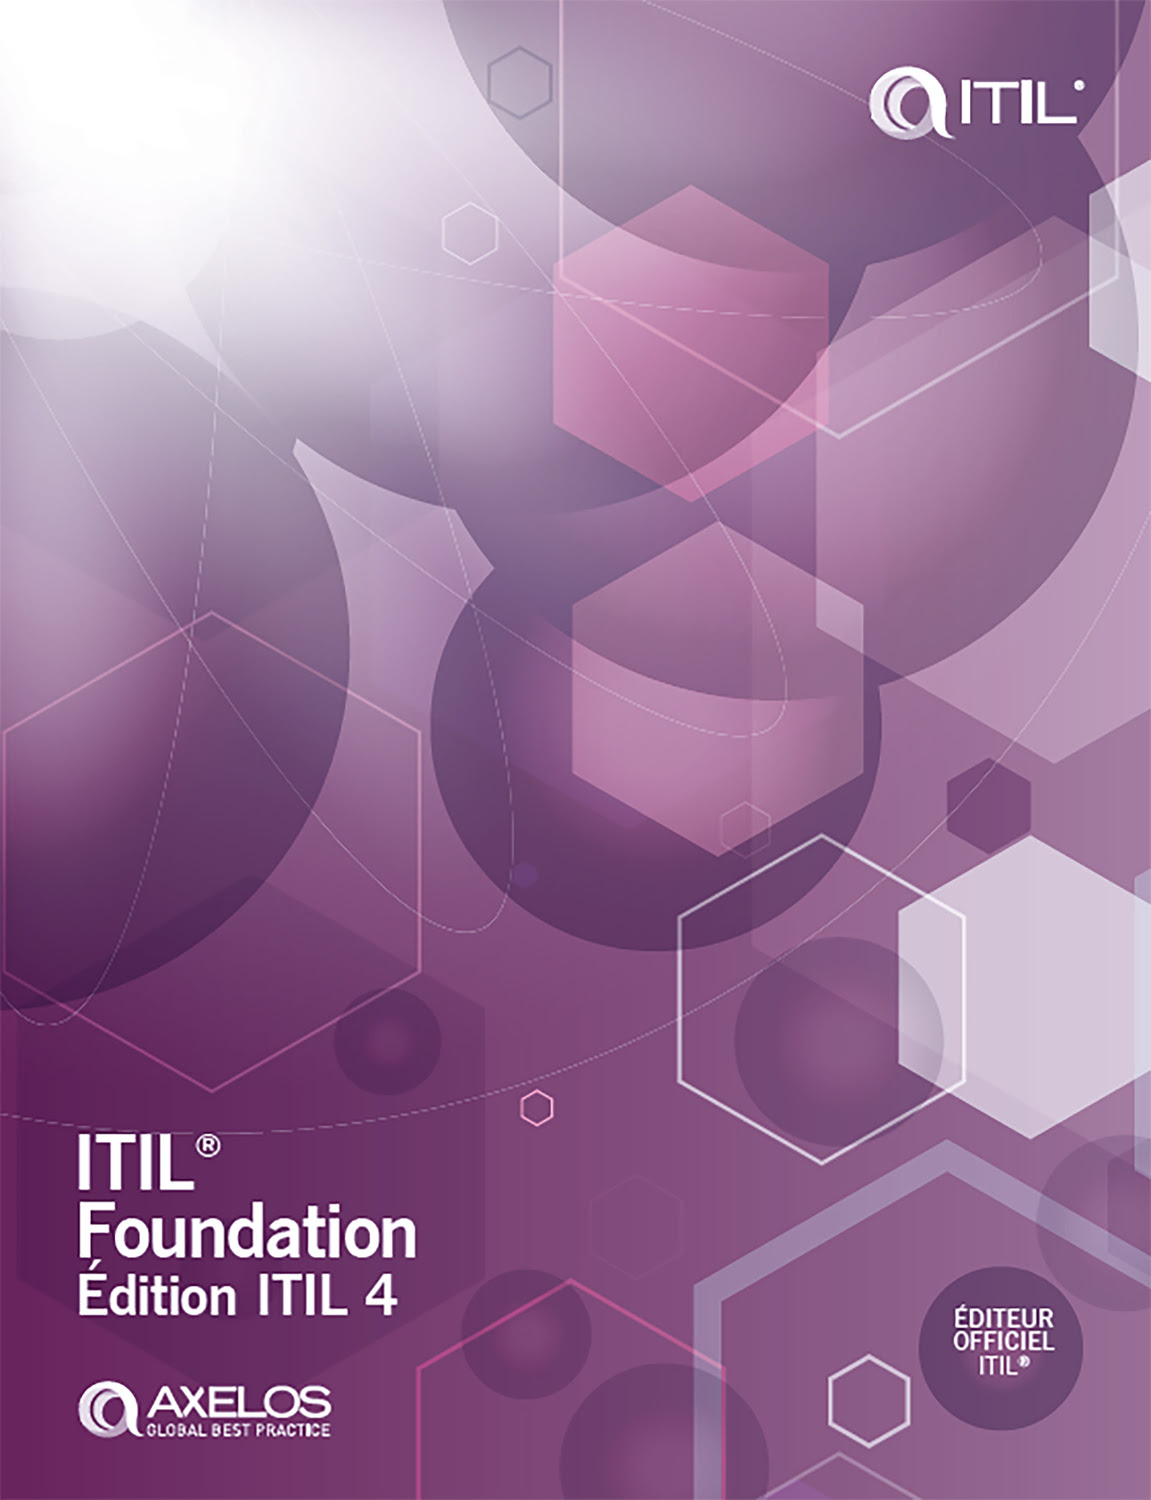 ITIL Foundation, ITIL 4 Edition: Spanish Translation EPUB